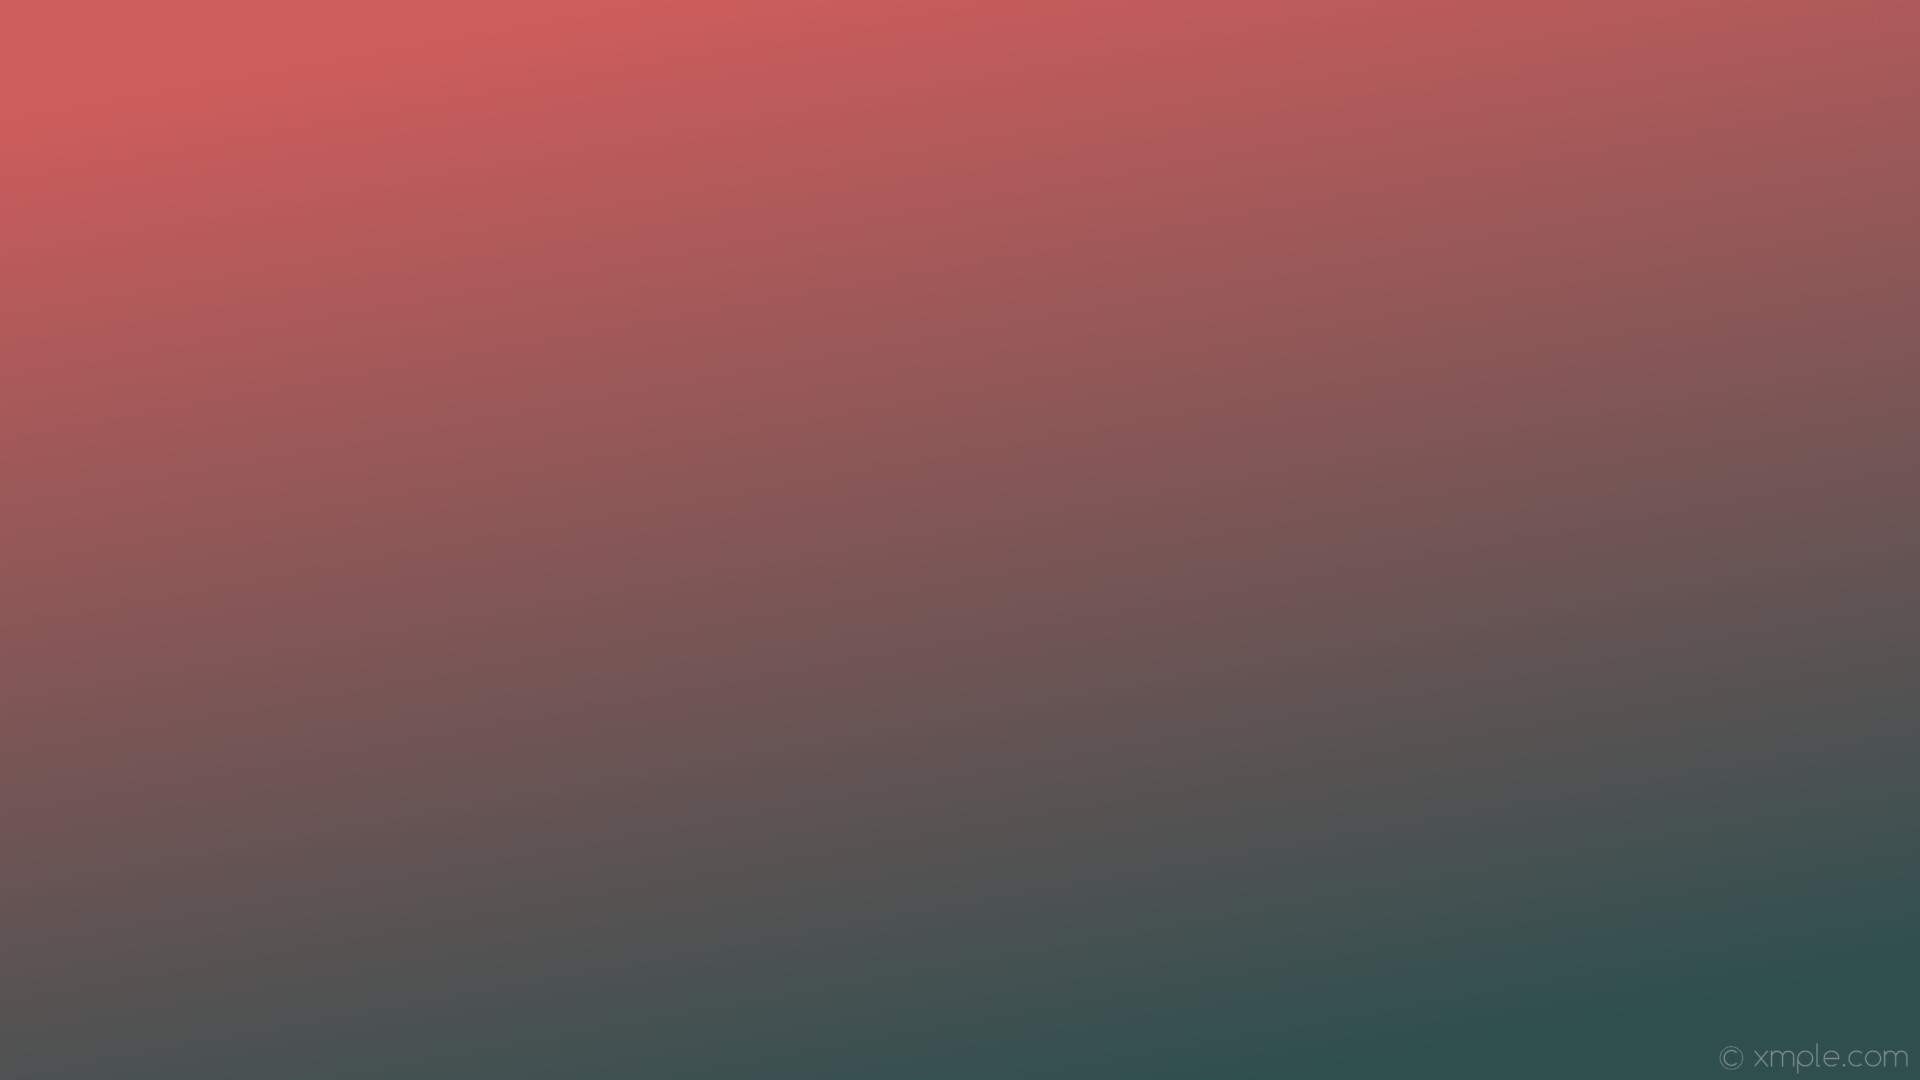 Wallpaper linear red grey gradient indian red dark slate gray #cd5c5c f4f4f 120